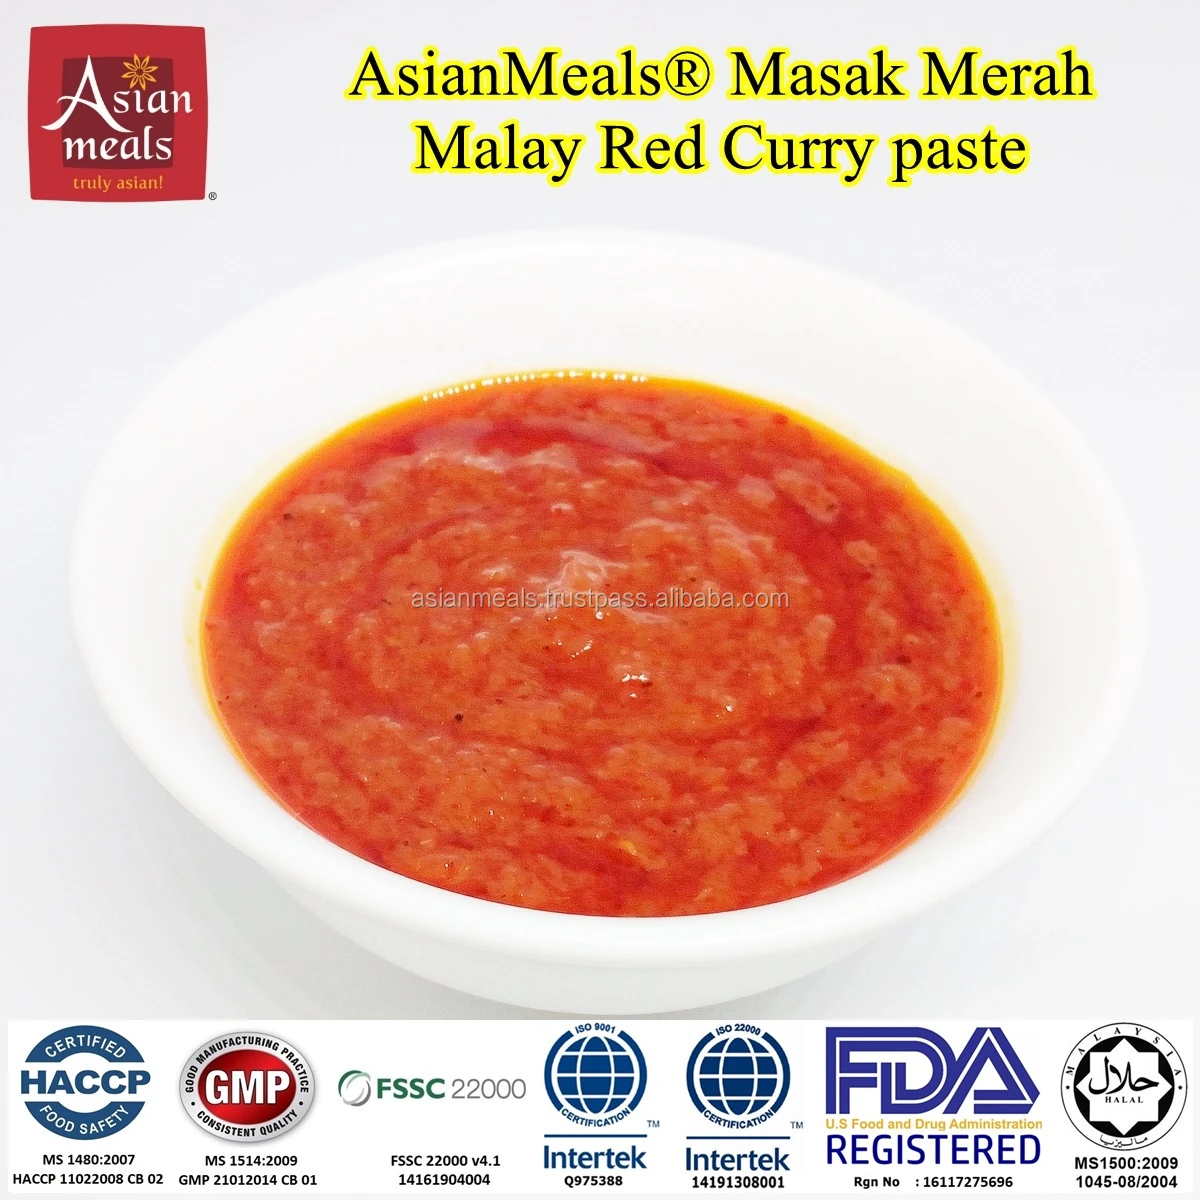 AsianMeals Malaysian Halal Masak Merah Malay Red Curry Paste